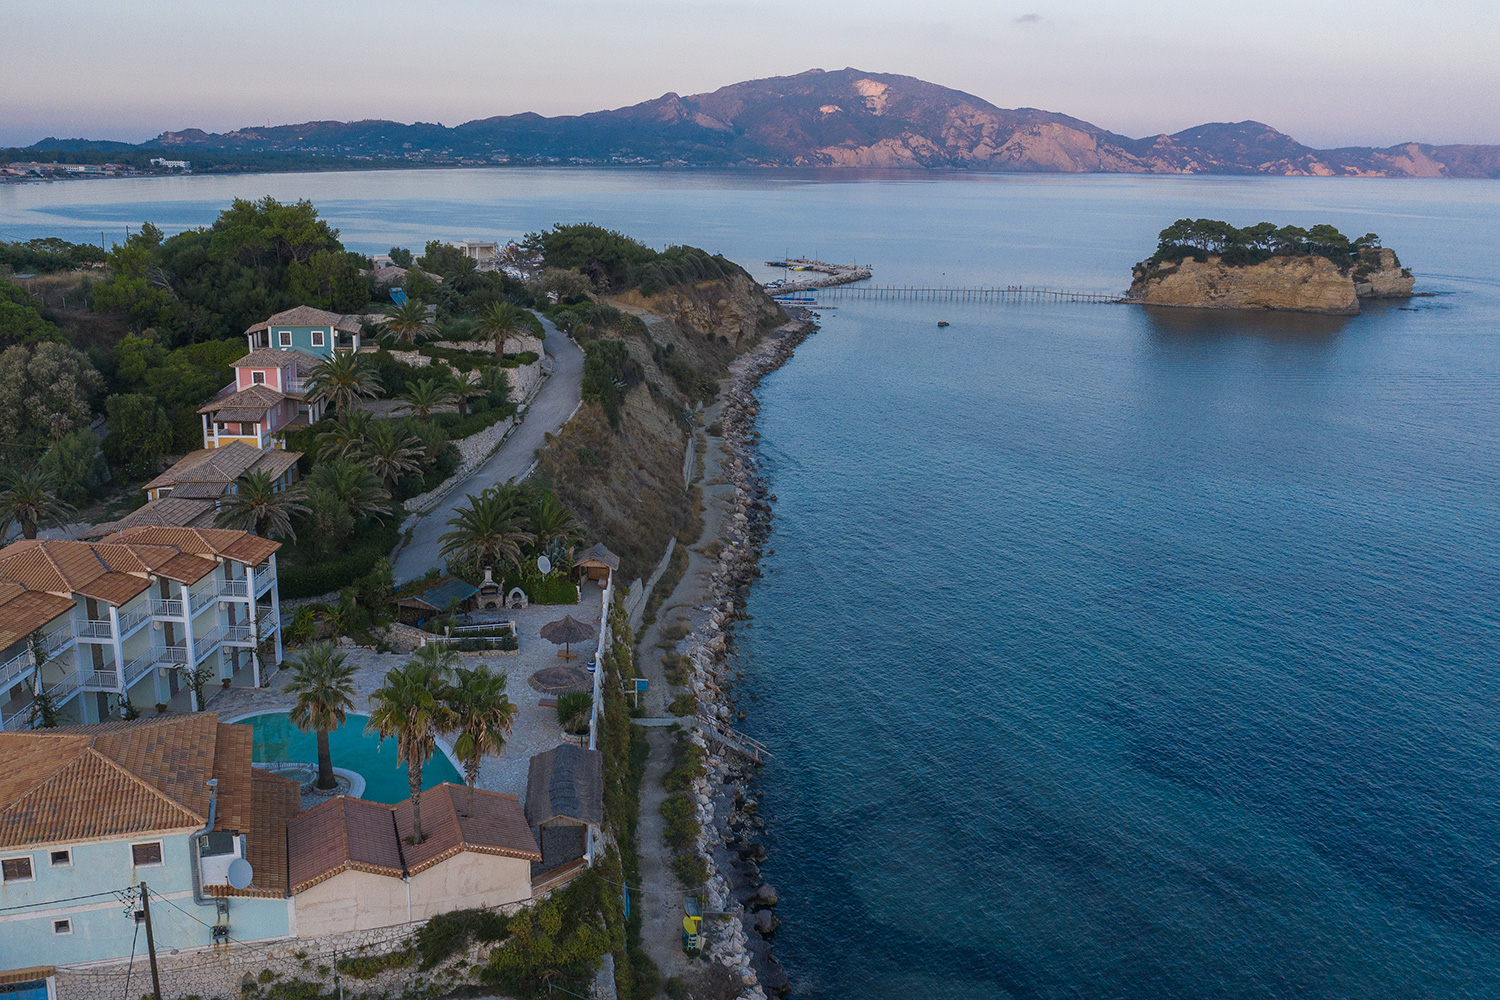 Foto af Agios Sostis beach - populært sted blandt afslapningskendere